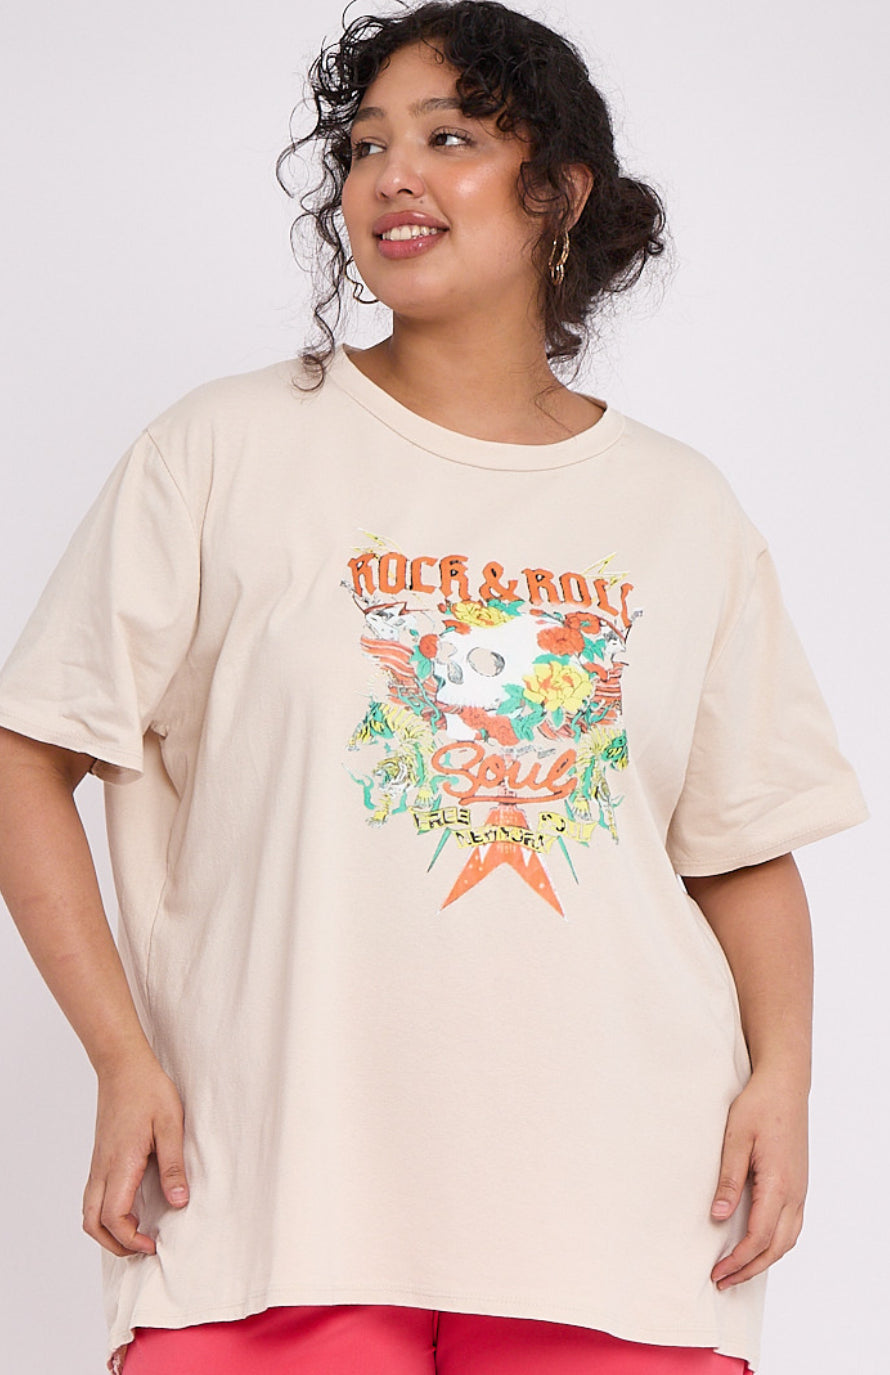 Oversized Printed Rock N Roll T-Shirt in Beige